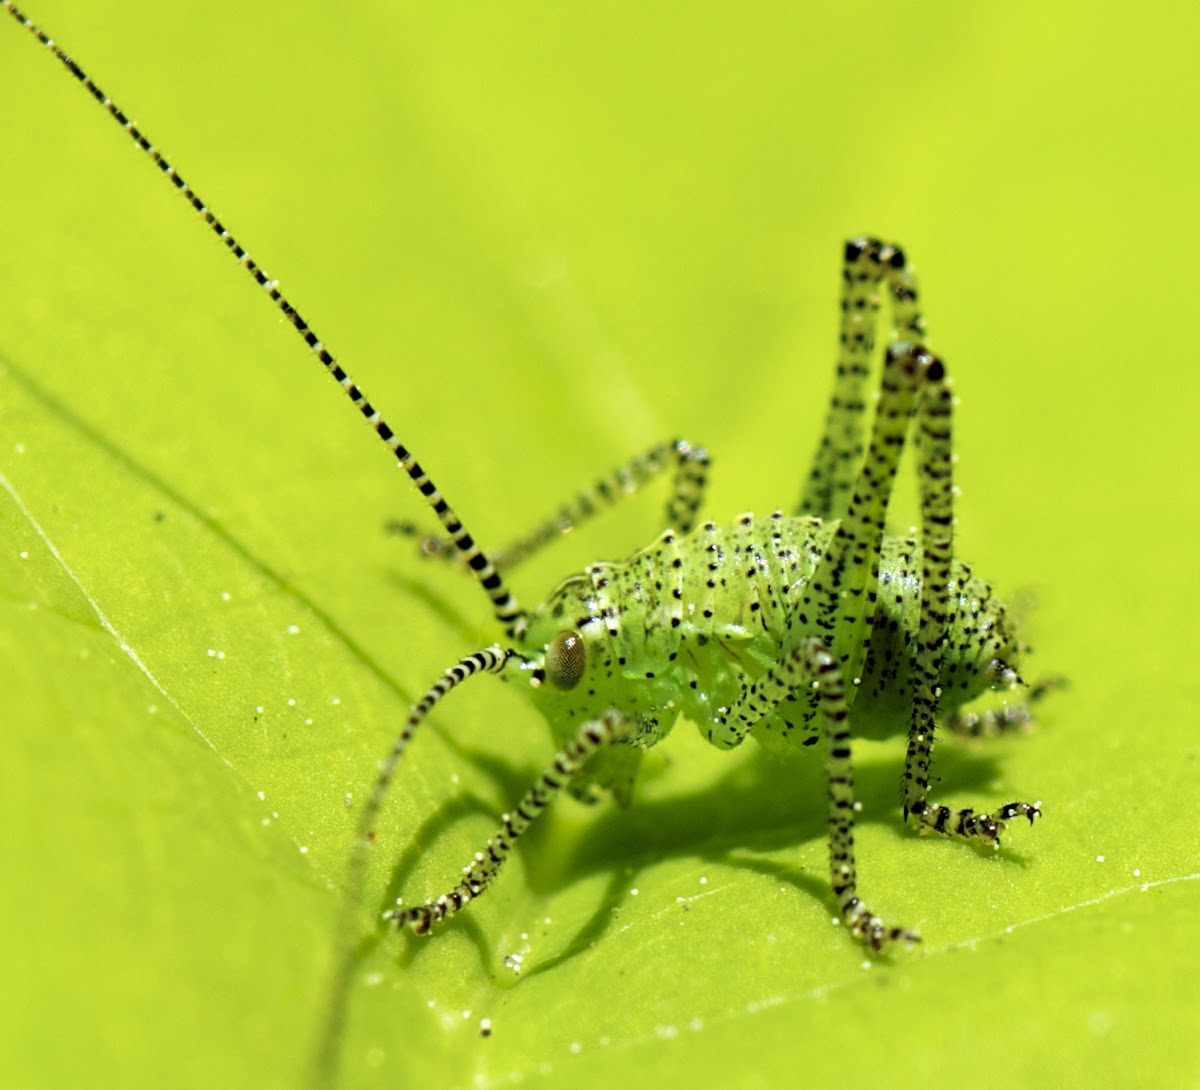 Speckled Bush-cricket Nymph